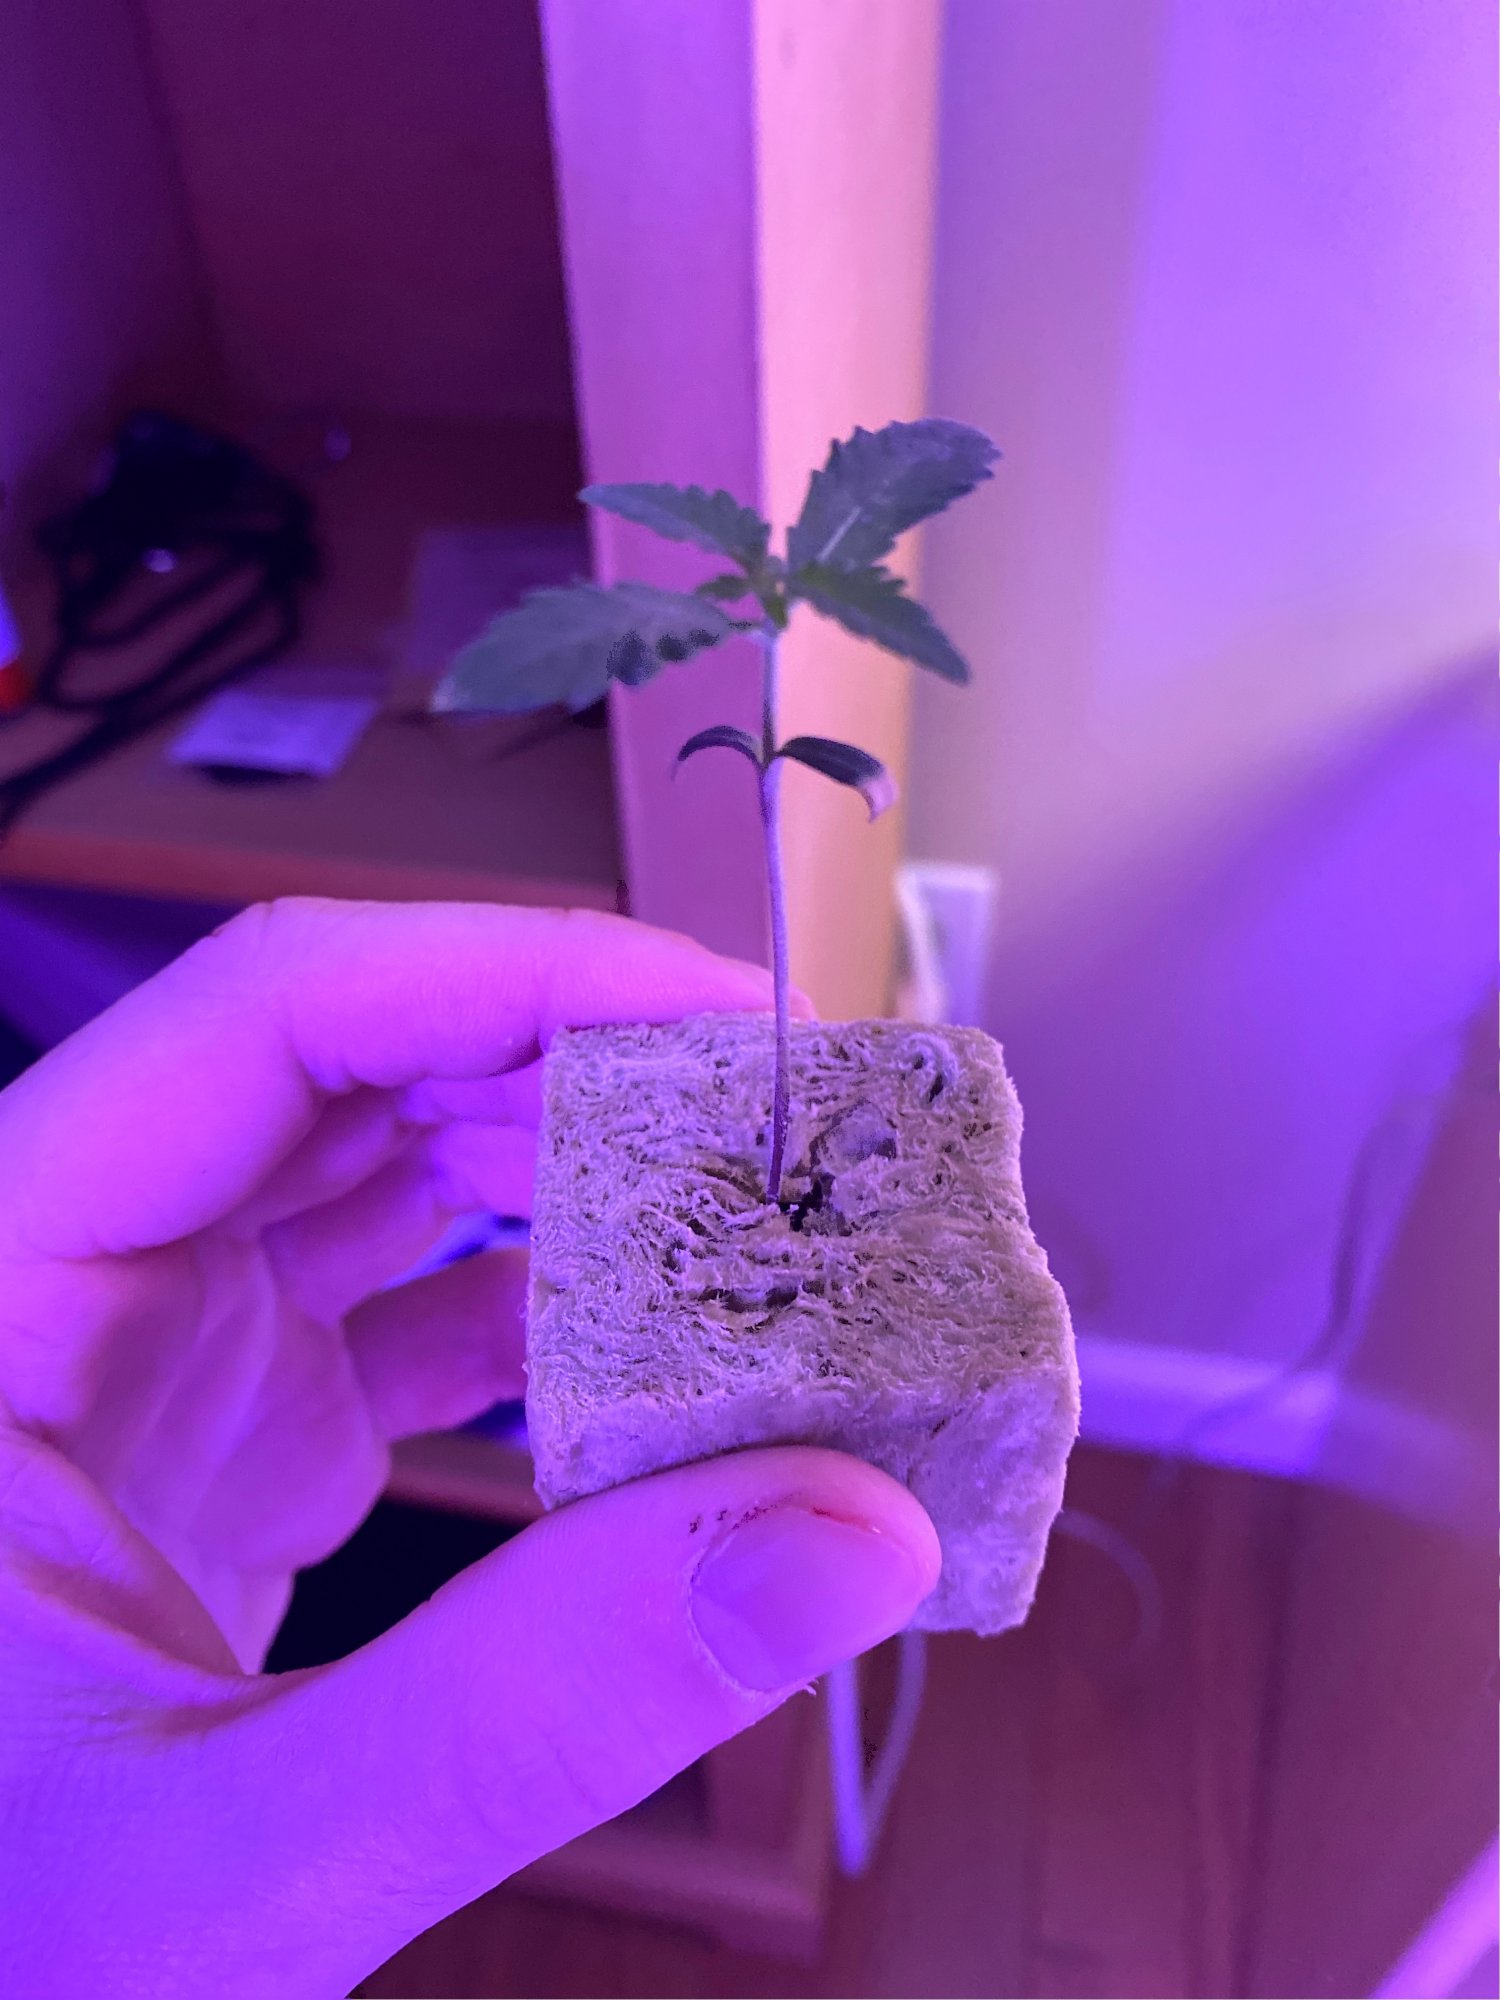 Need help  advice on plants 4